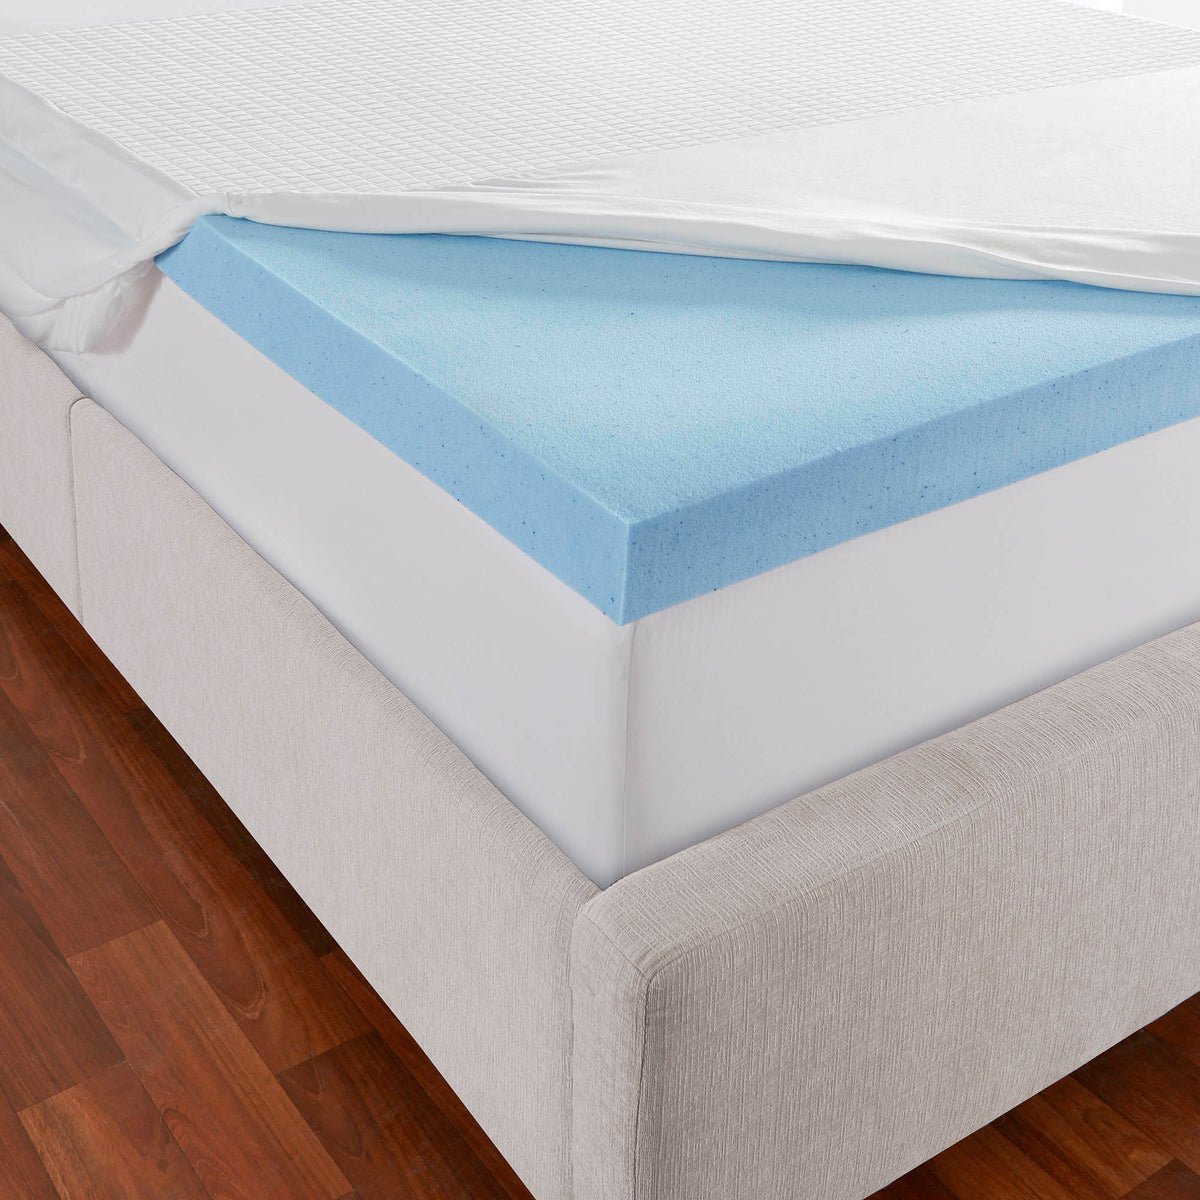 Best Price Mattress Full Mattress Topper - 3 inch Gel Memory Foam Bed Topper with Cooling Mattress Pad, Full, Blue